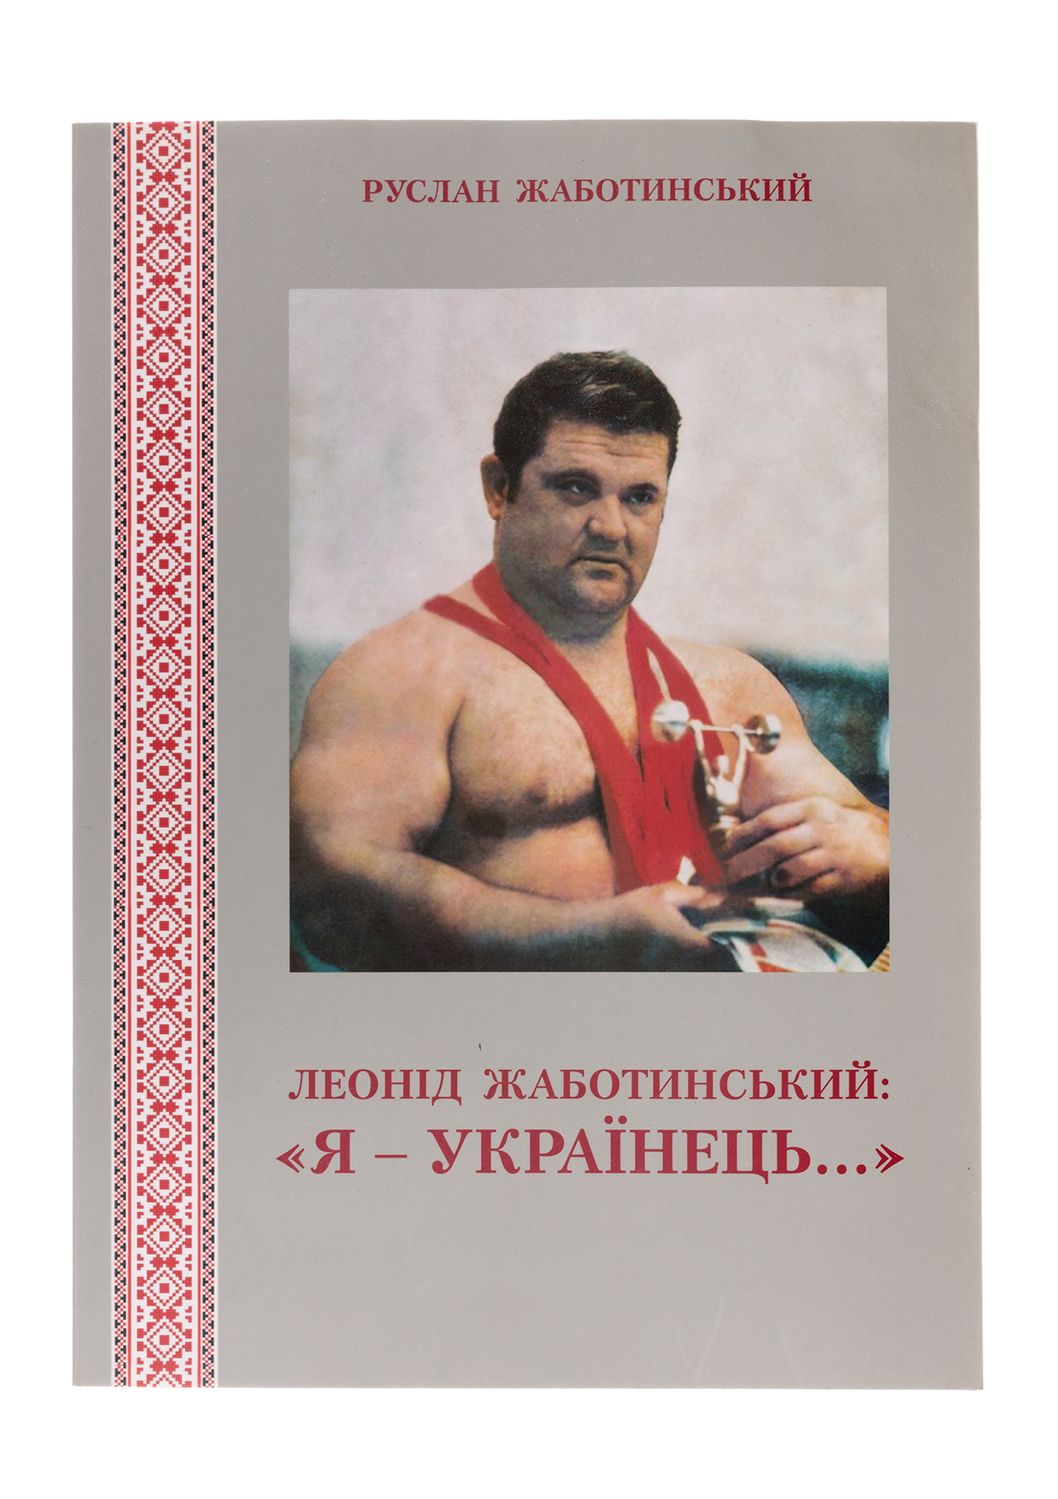 Leonid Zhabotinsky's book I am a Ukrainian